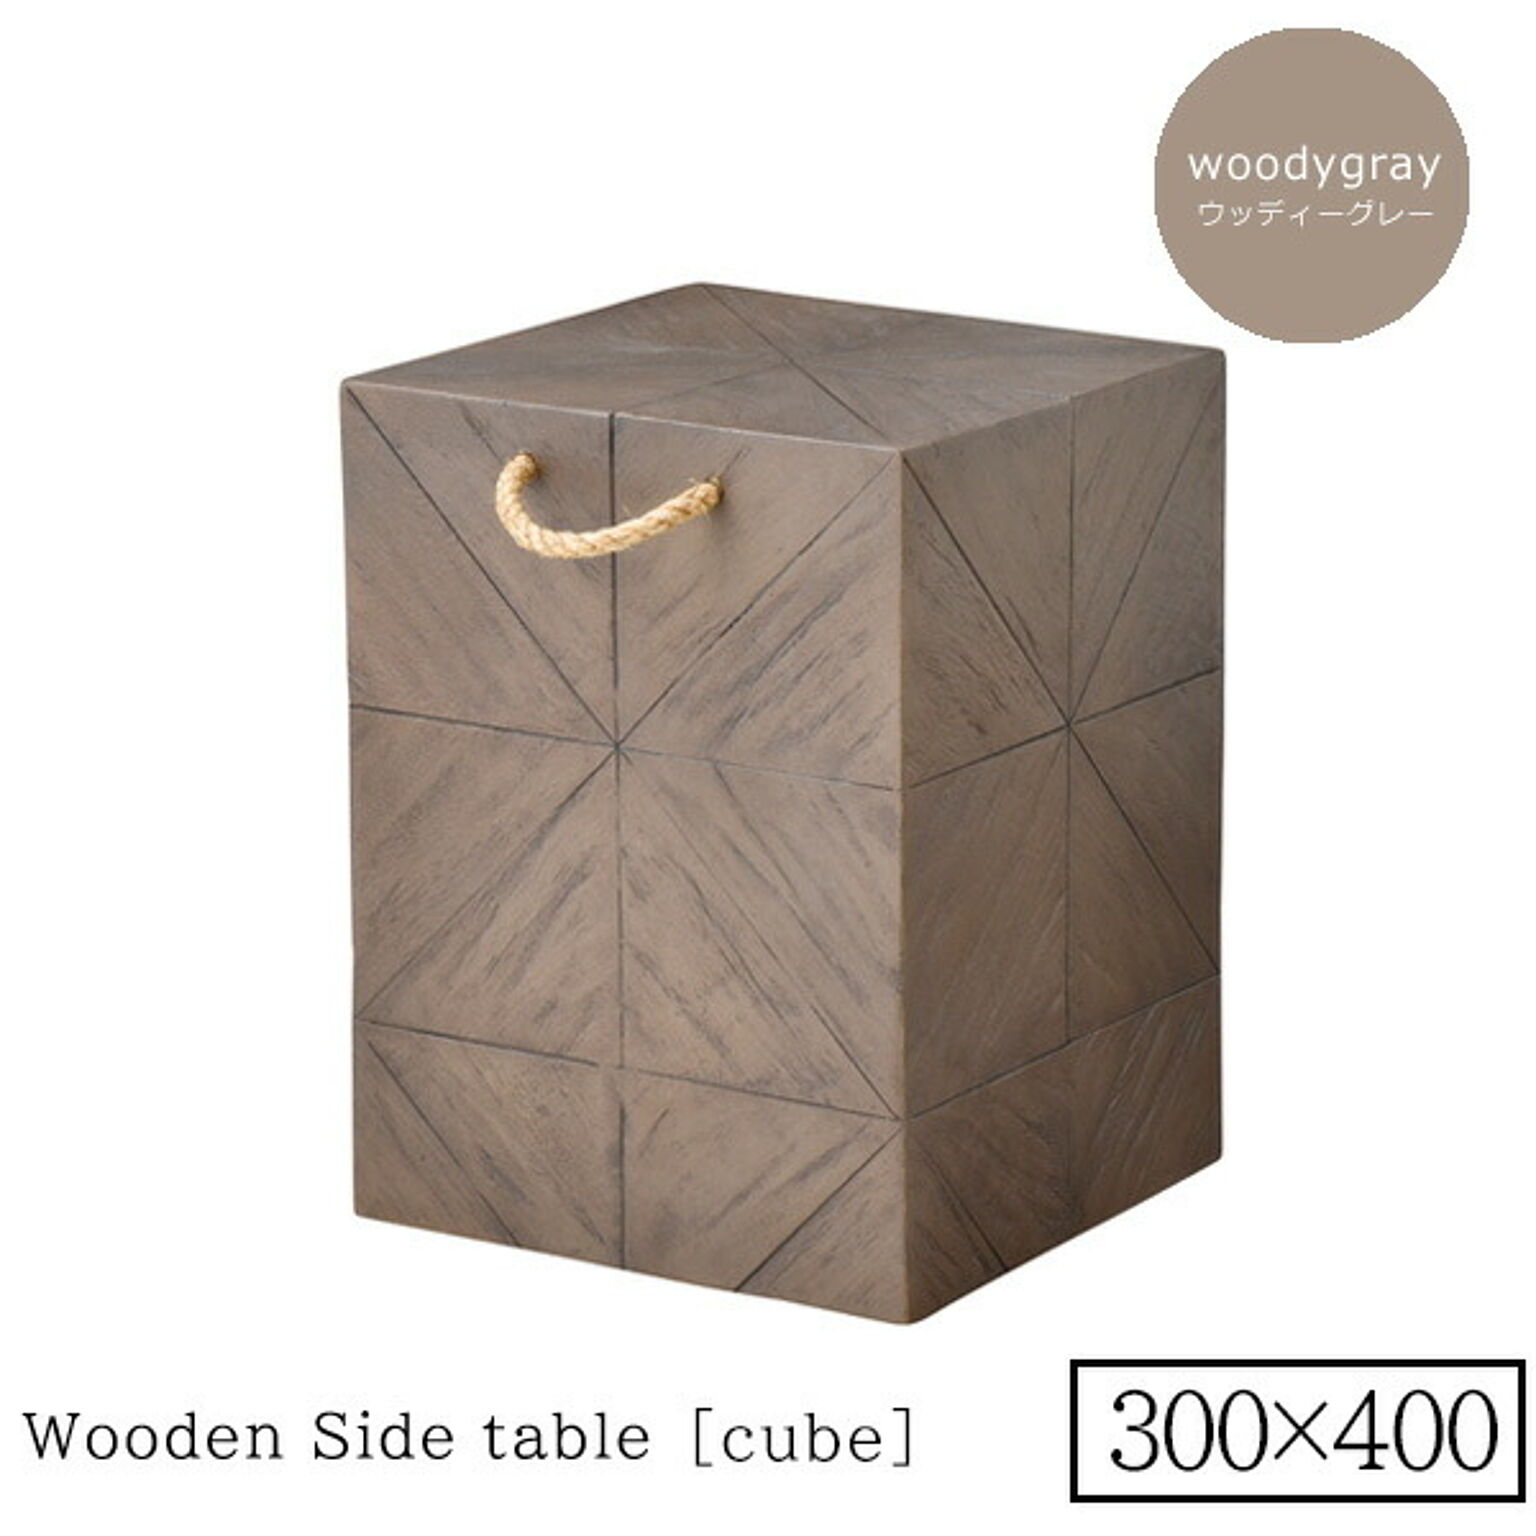 400x550 ： リビングサイドテーブル【cube】 ウッディーグレー コーヒーテーブル リビング